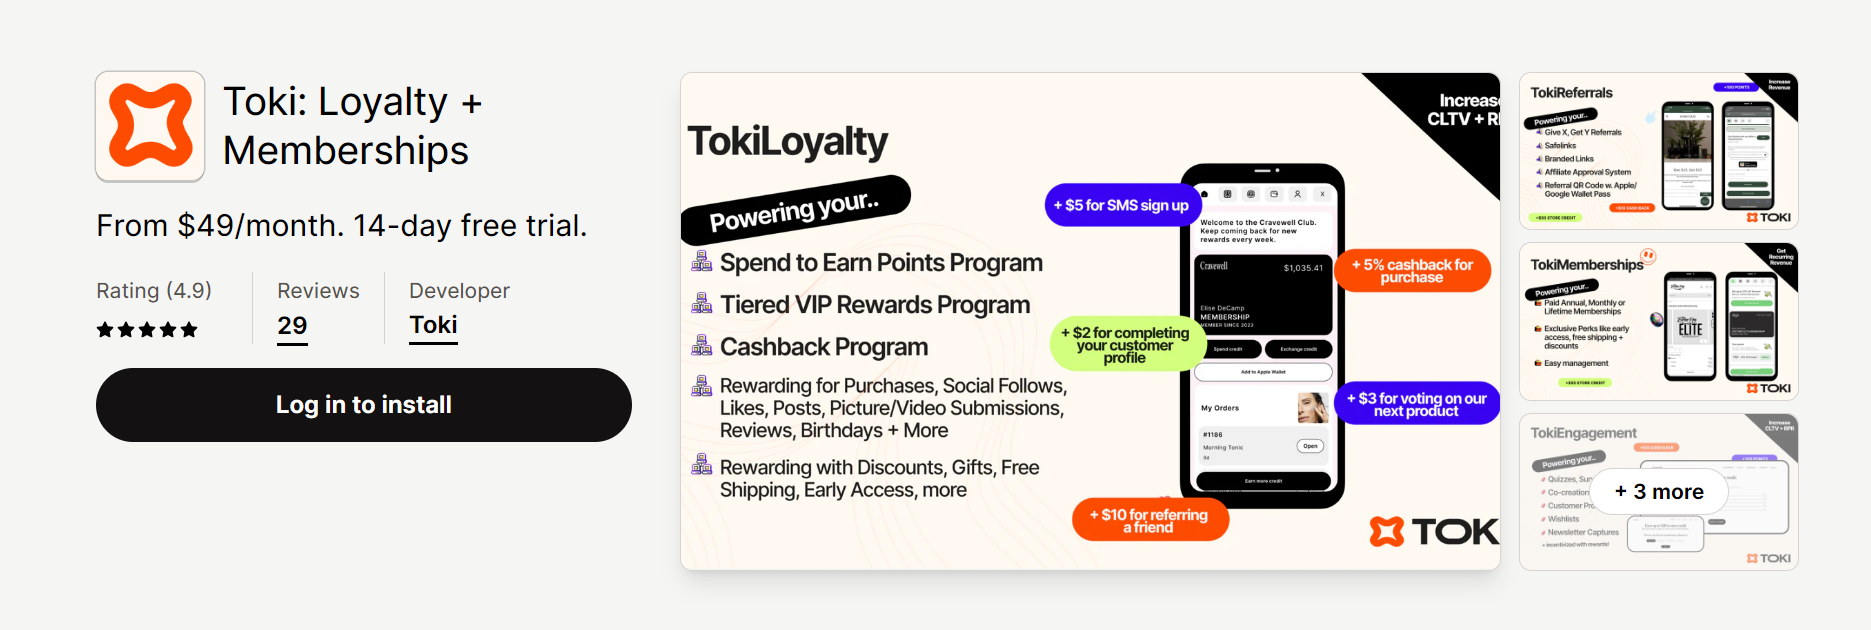 Toki: Loyalty + Memberships